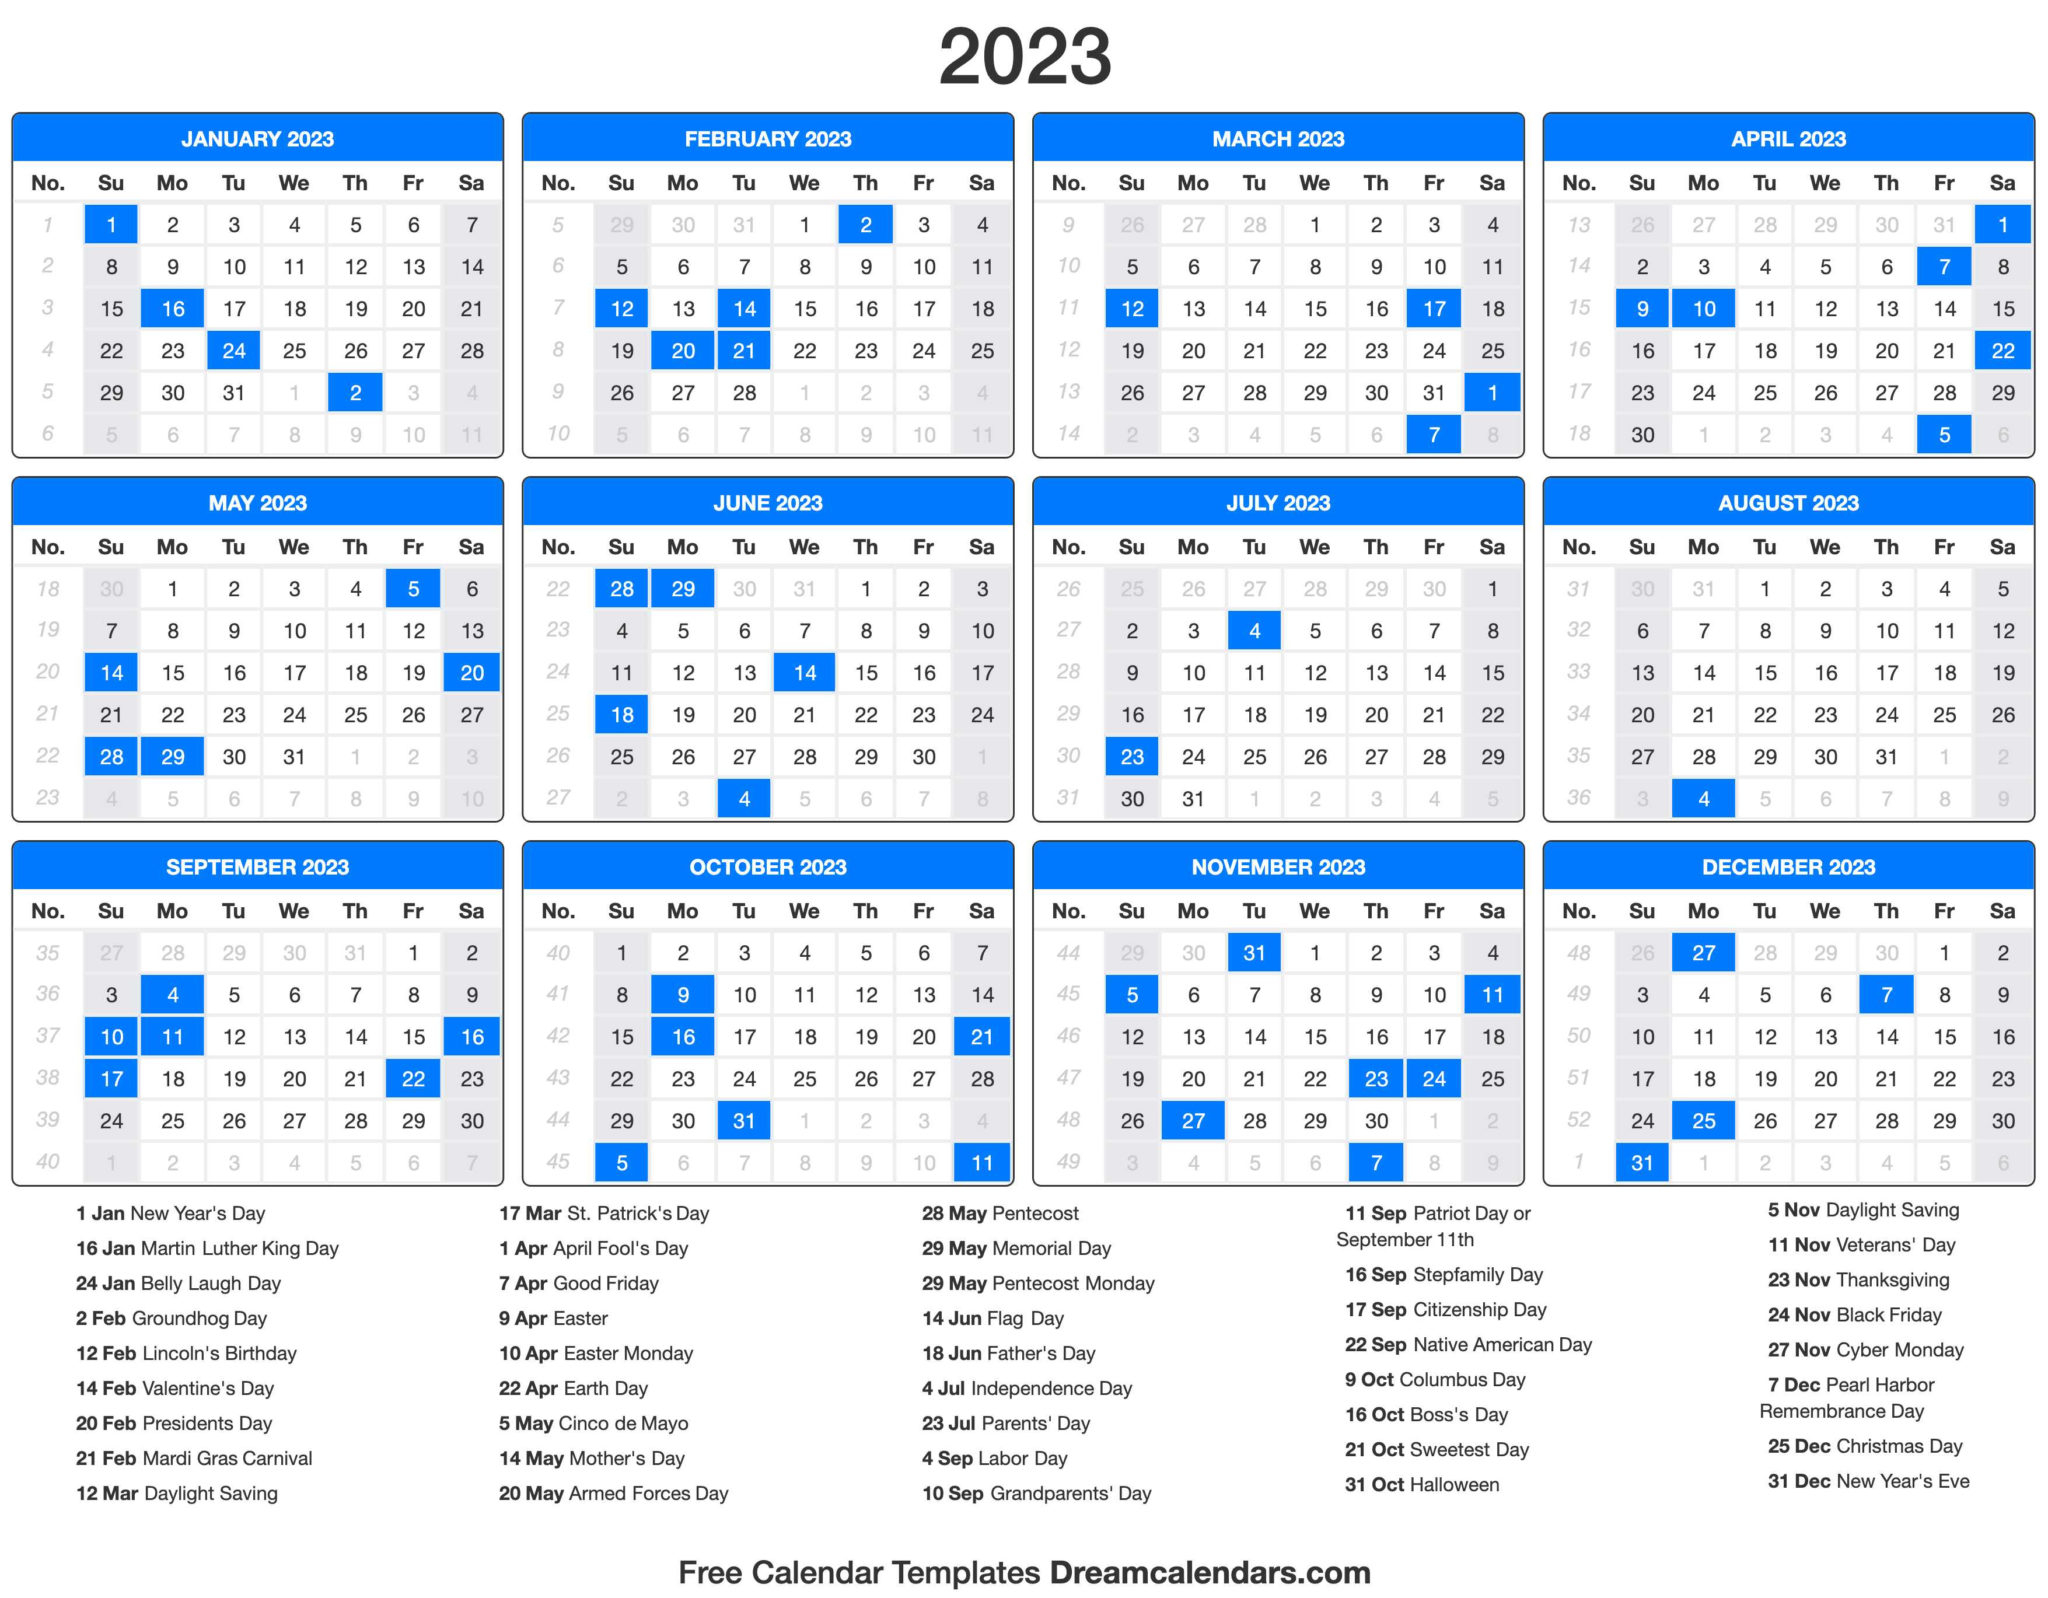 Jewish Calendar 2023 Pdf - Customize and Print